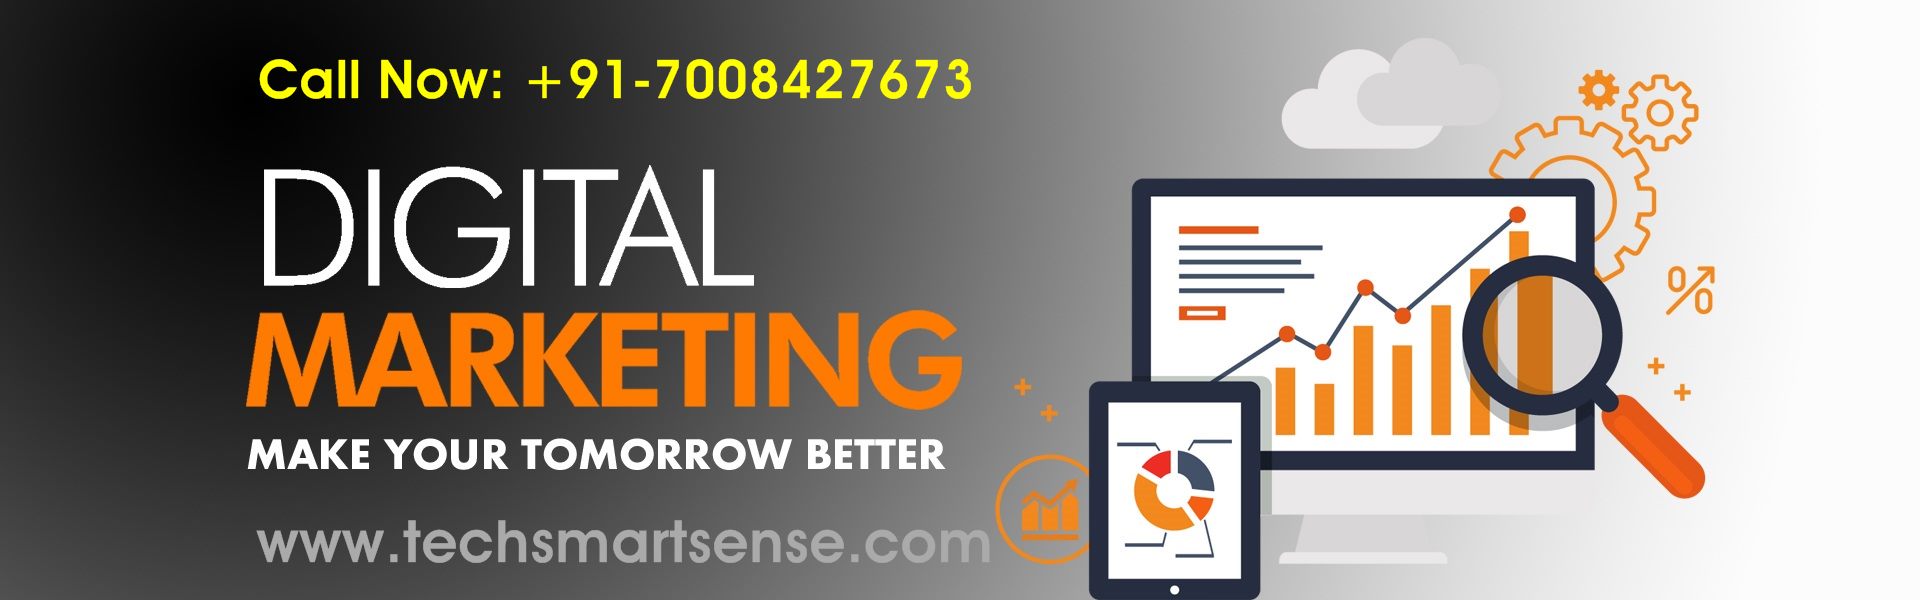 Tech Smart Sense - The Next-Generation Best Digital Marketing Service Provider In Bhubaneswar